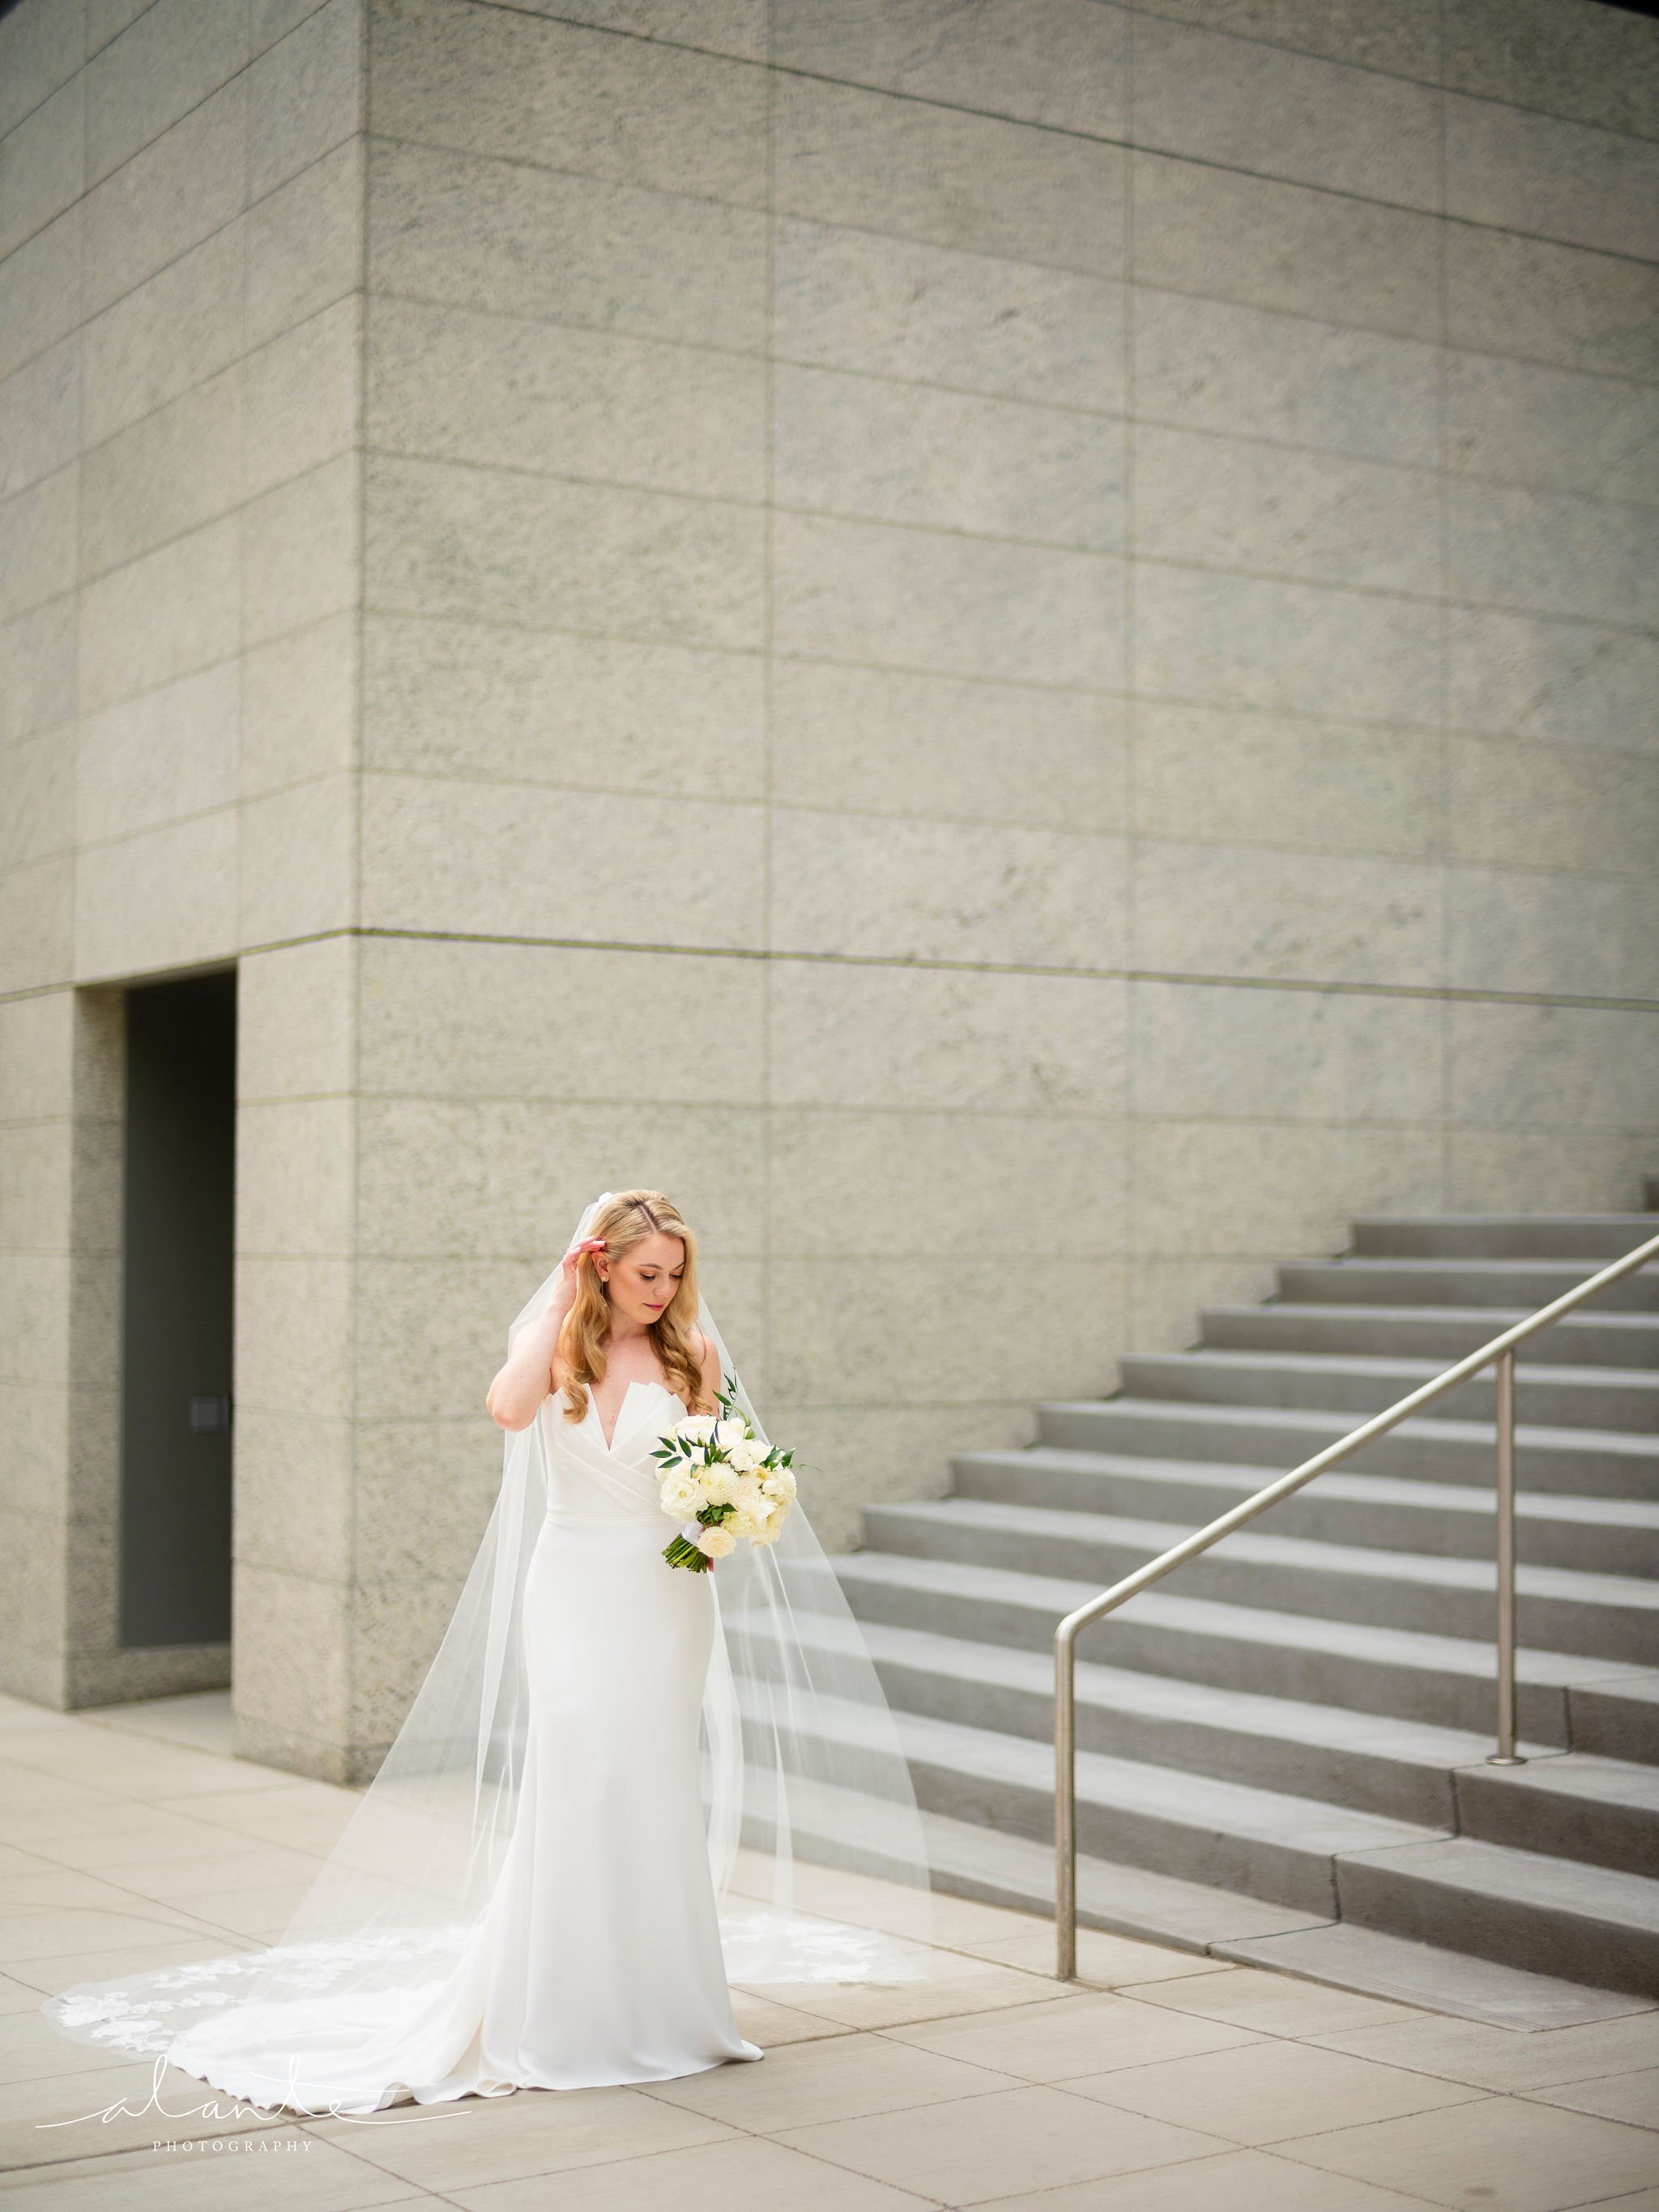 Alante-Photography-Seattle-Washington-Fairmont-Olympic-Wedding-051.jpg